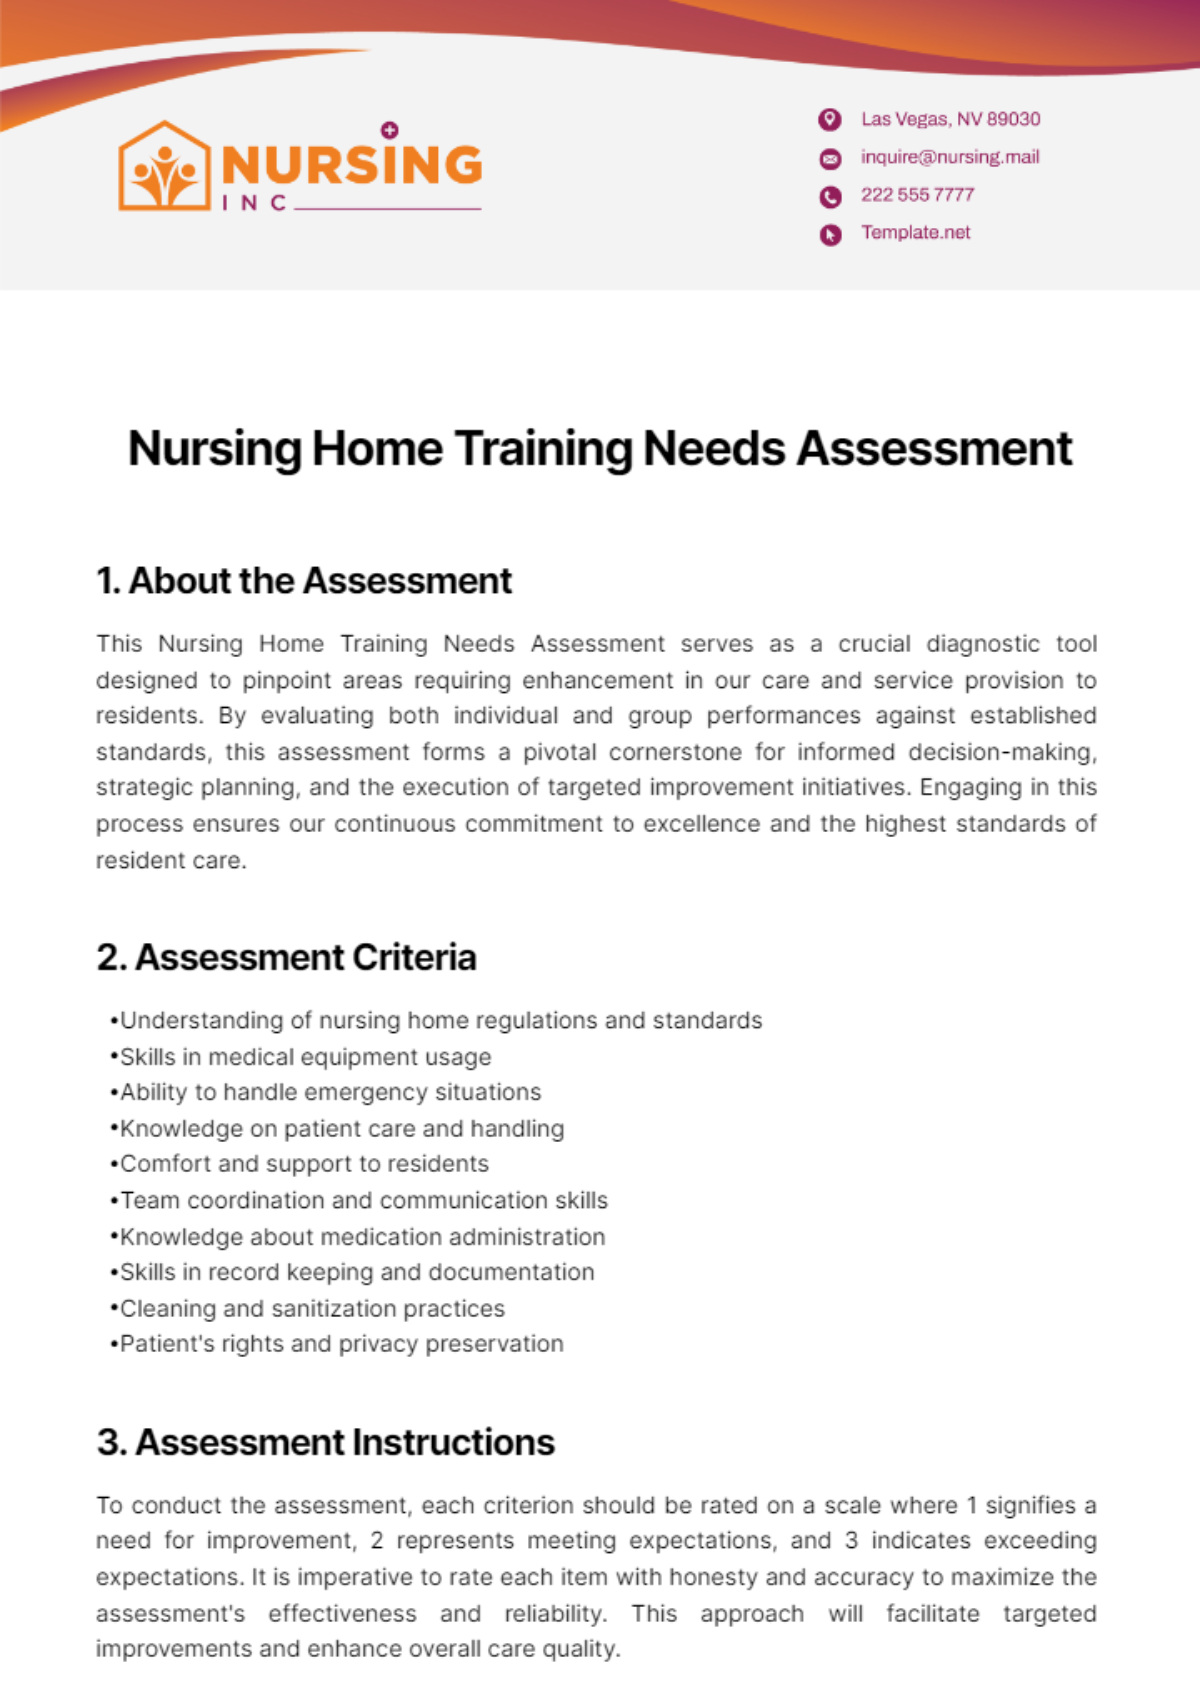 Nursing Home Training Needs Assessment Template